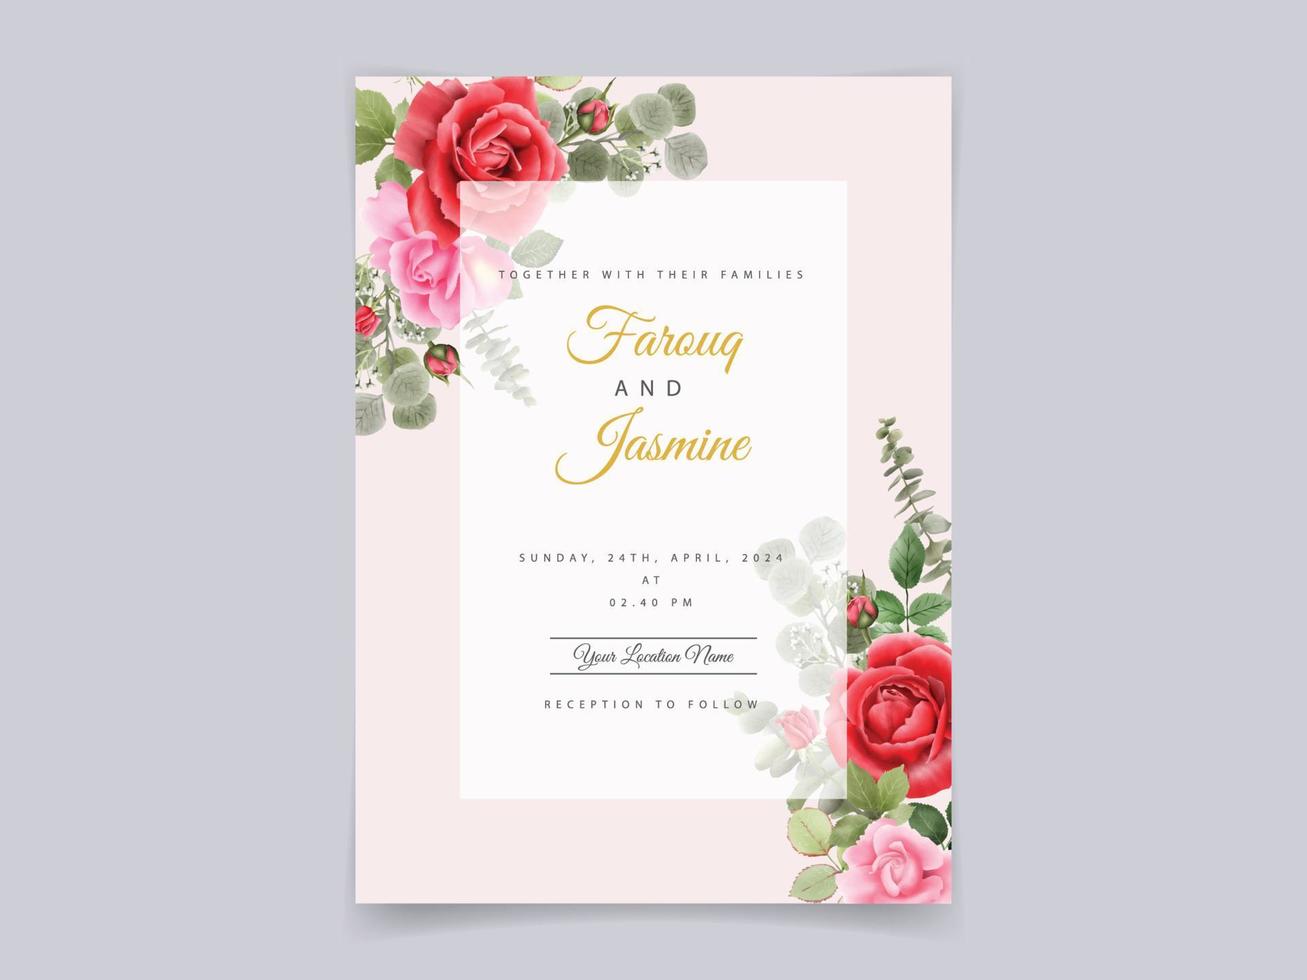 Wedding invitation card red roses design vector